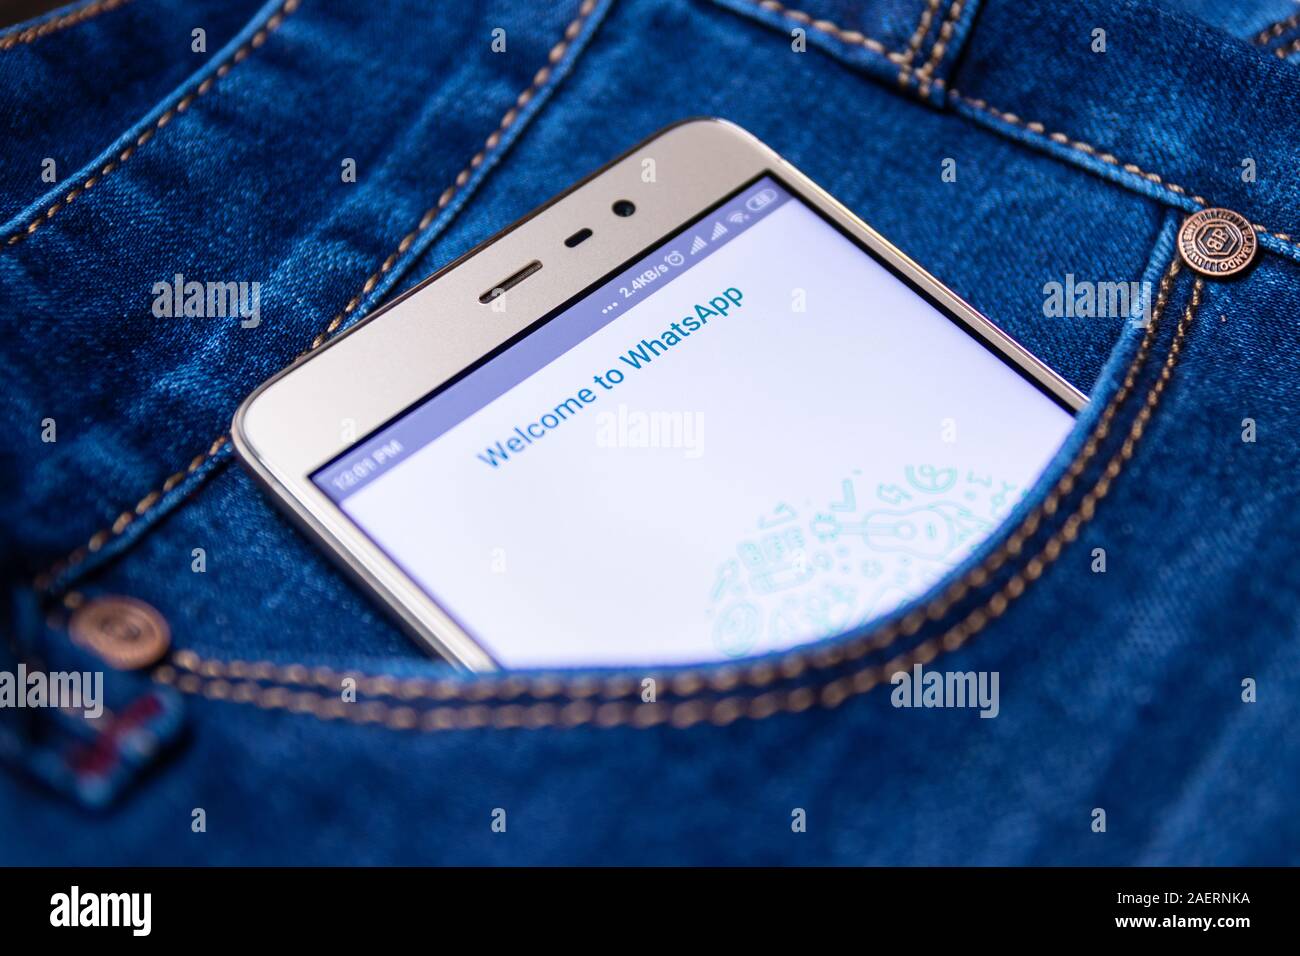 Whatsapp icon on smartphone screen in jeans pocket. Cheboksary, Russia, 02/17/2019 Stock Photo